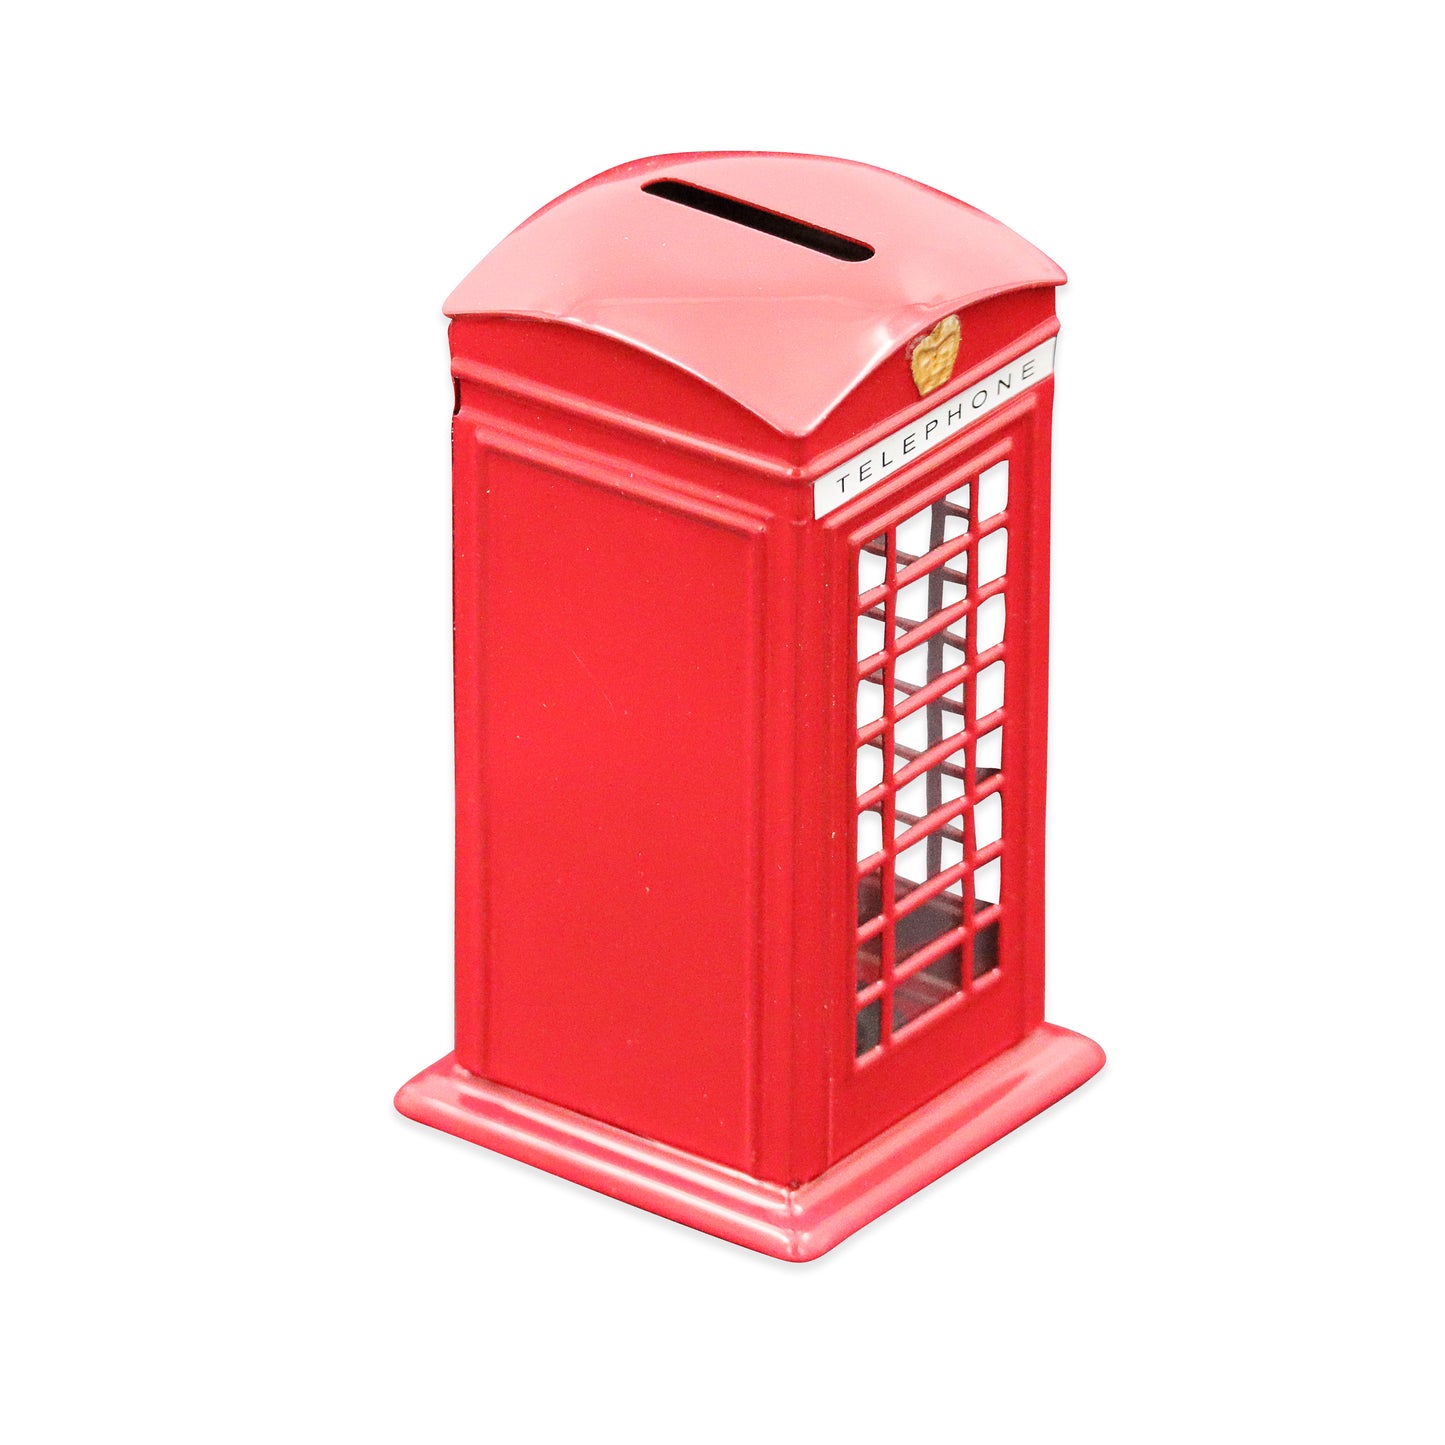 London Telephone Box Piggy Bank Money Box